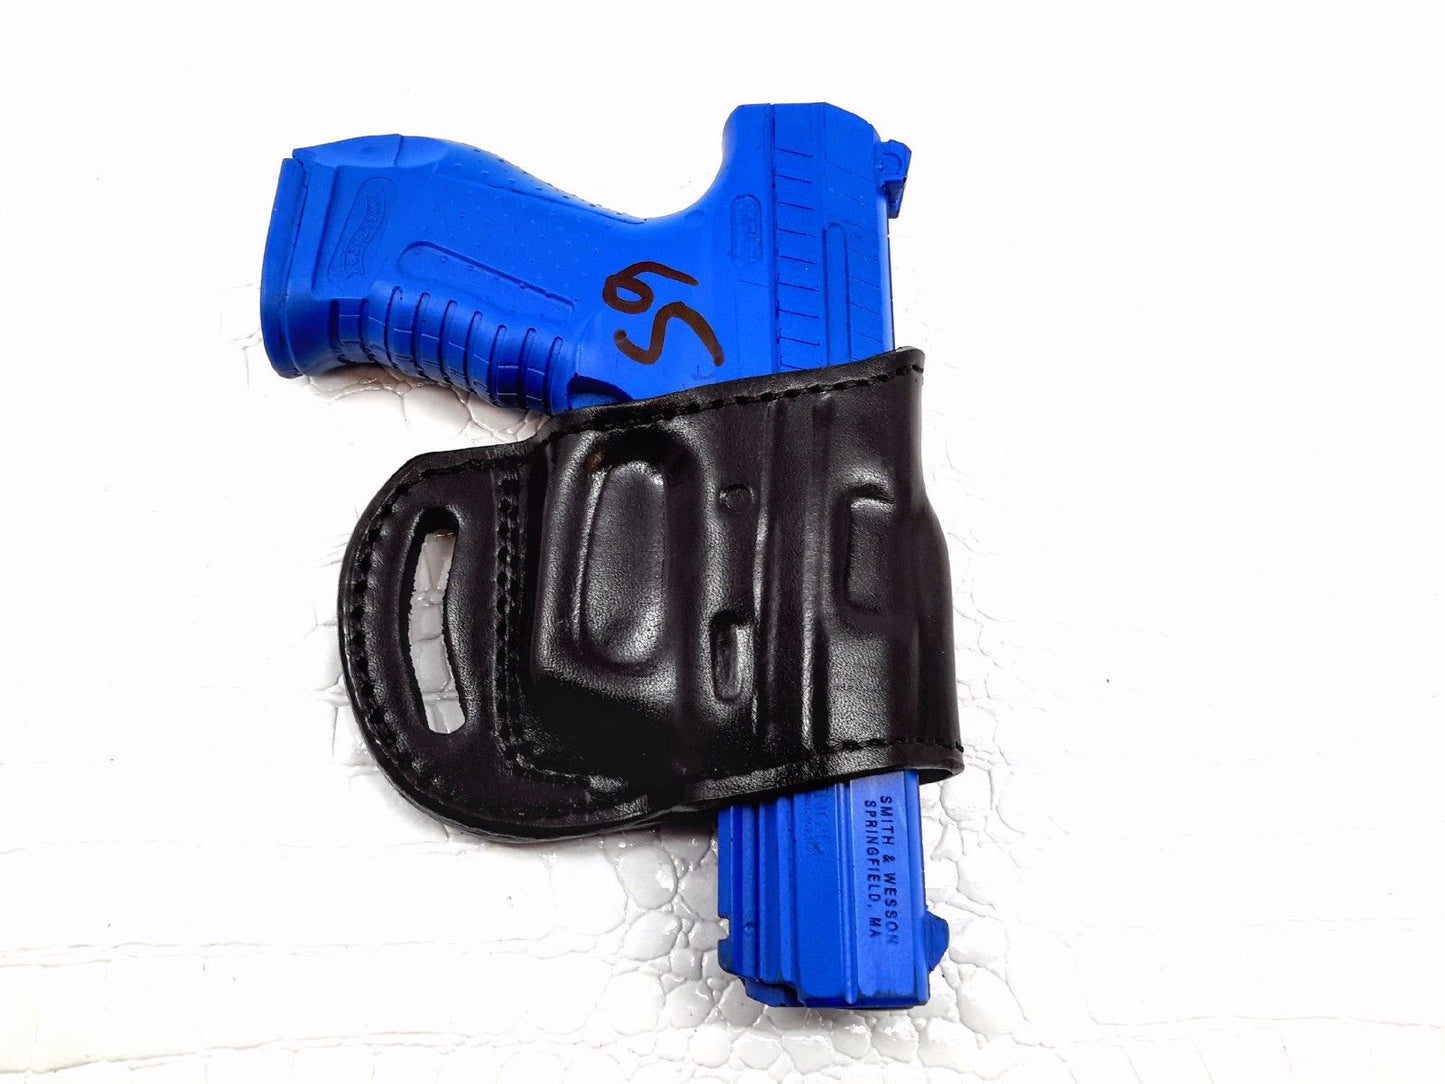 Yaqui slide belt holster for EAA SAR K2P 9mm , MyHolster